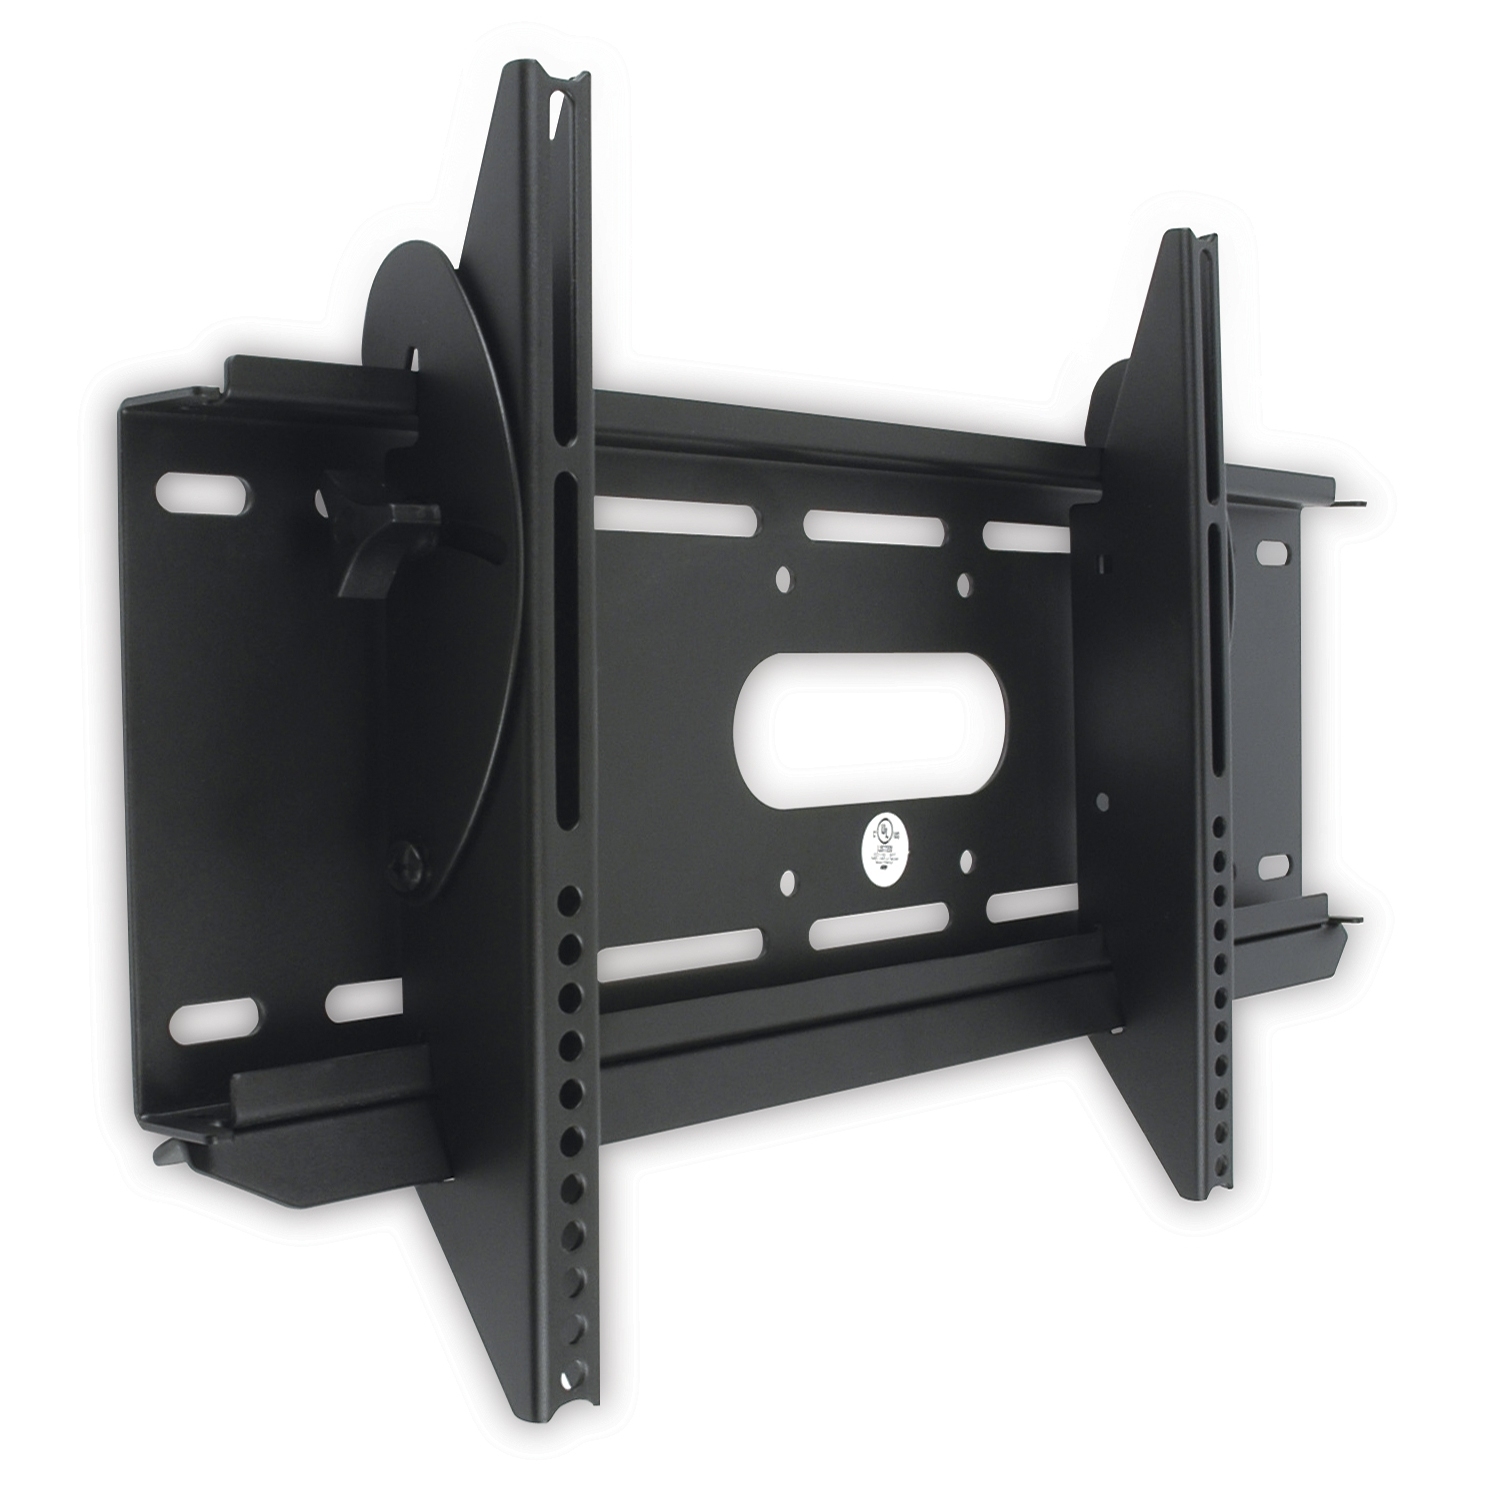 ViewSonic - Mounting kit (wall mount) - for LCD TV - metal - black - wall-mountable - for ViewSonic CDE4320, EP3220, VX4381, NextVision N2050, N2751, N3260, N3760, N4060, N4200